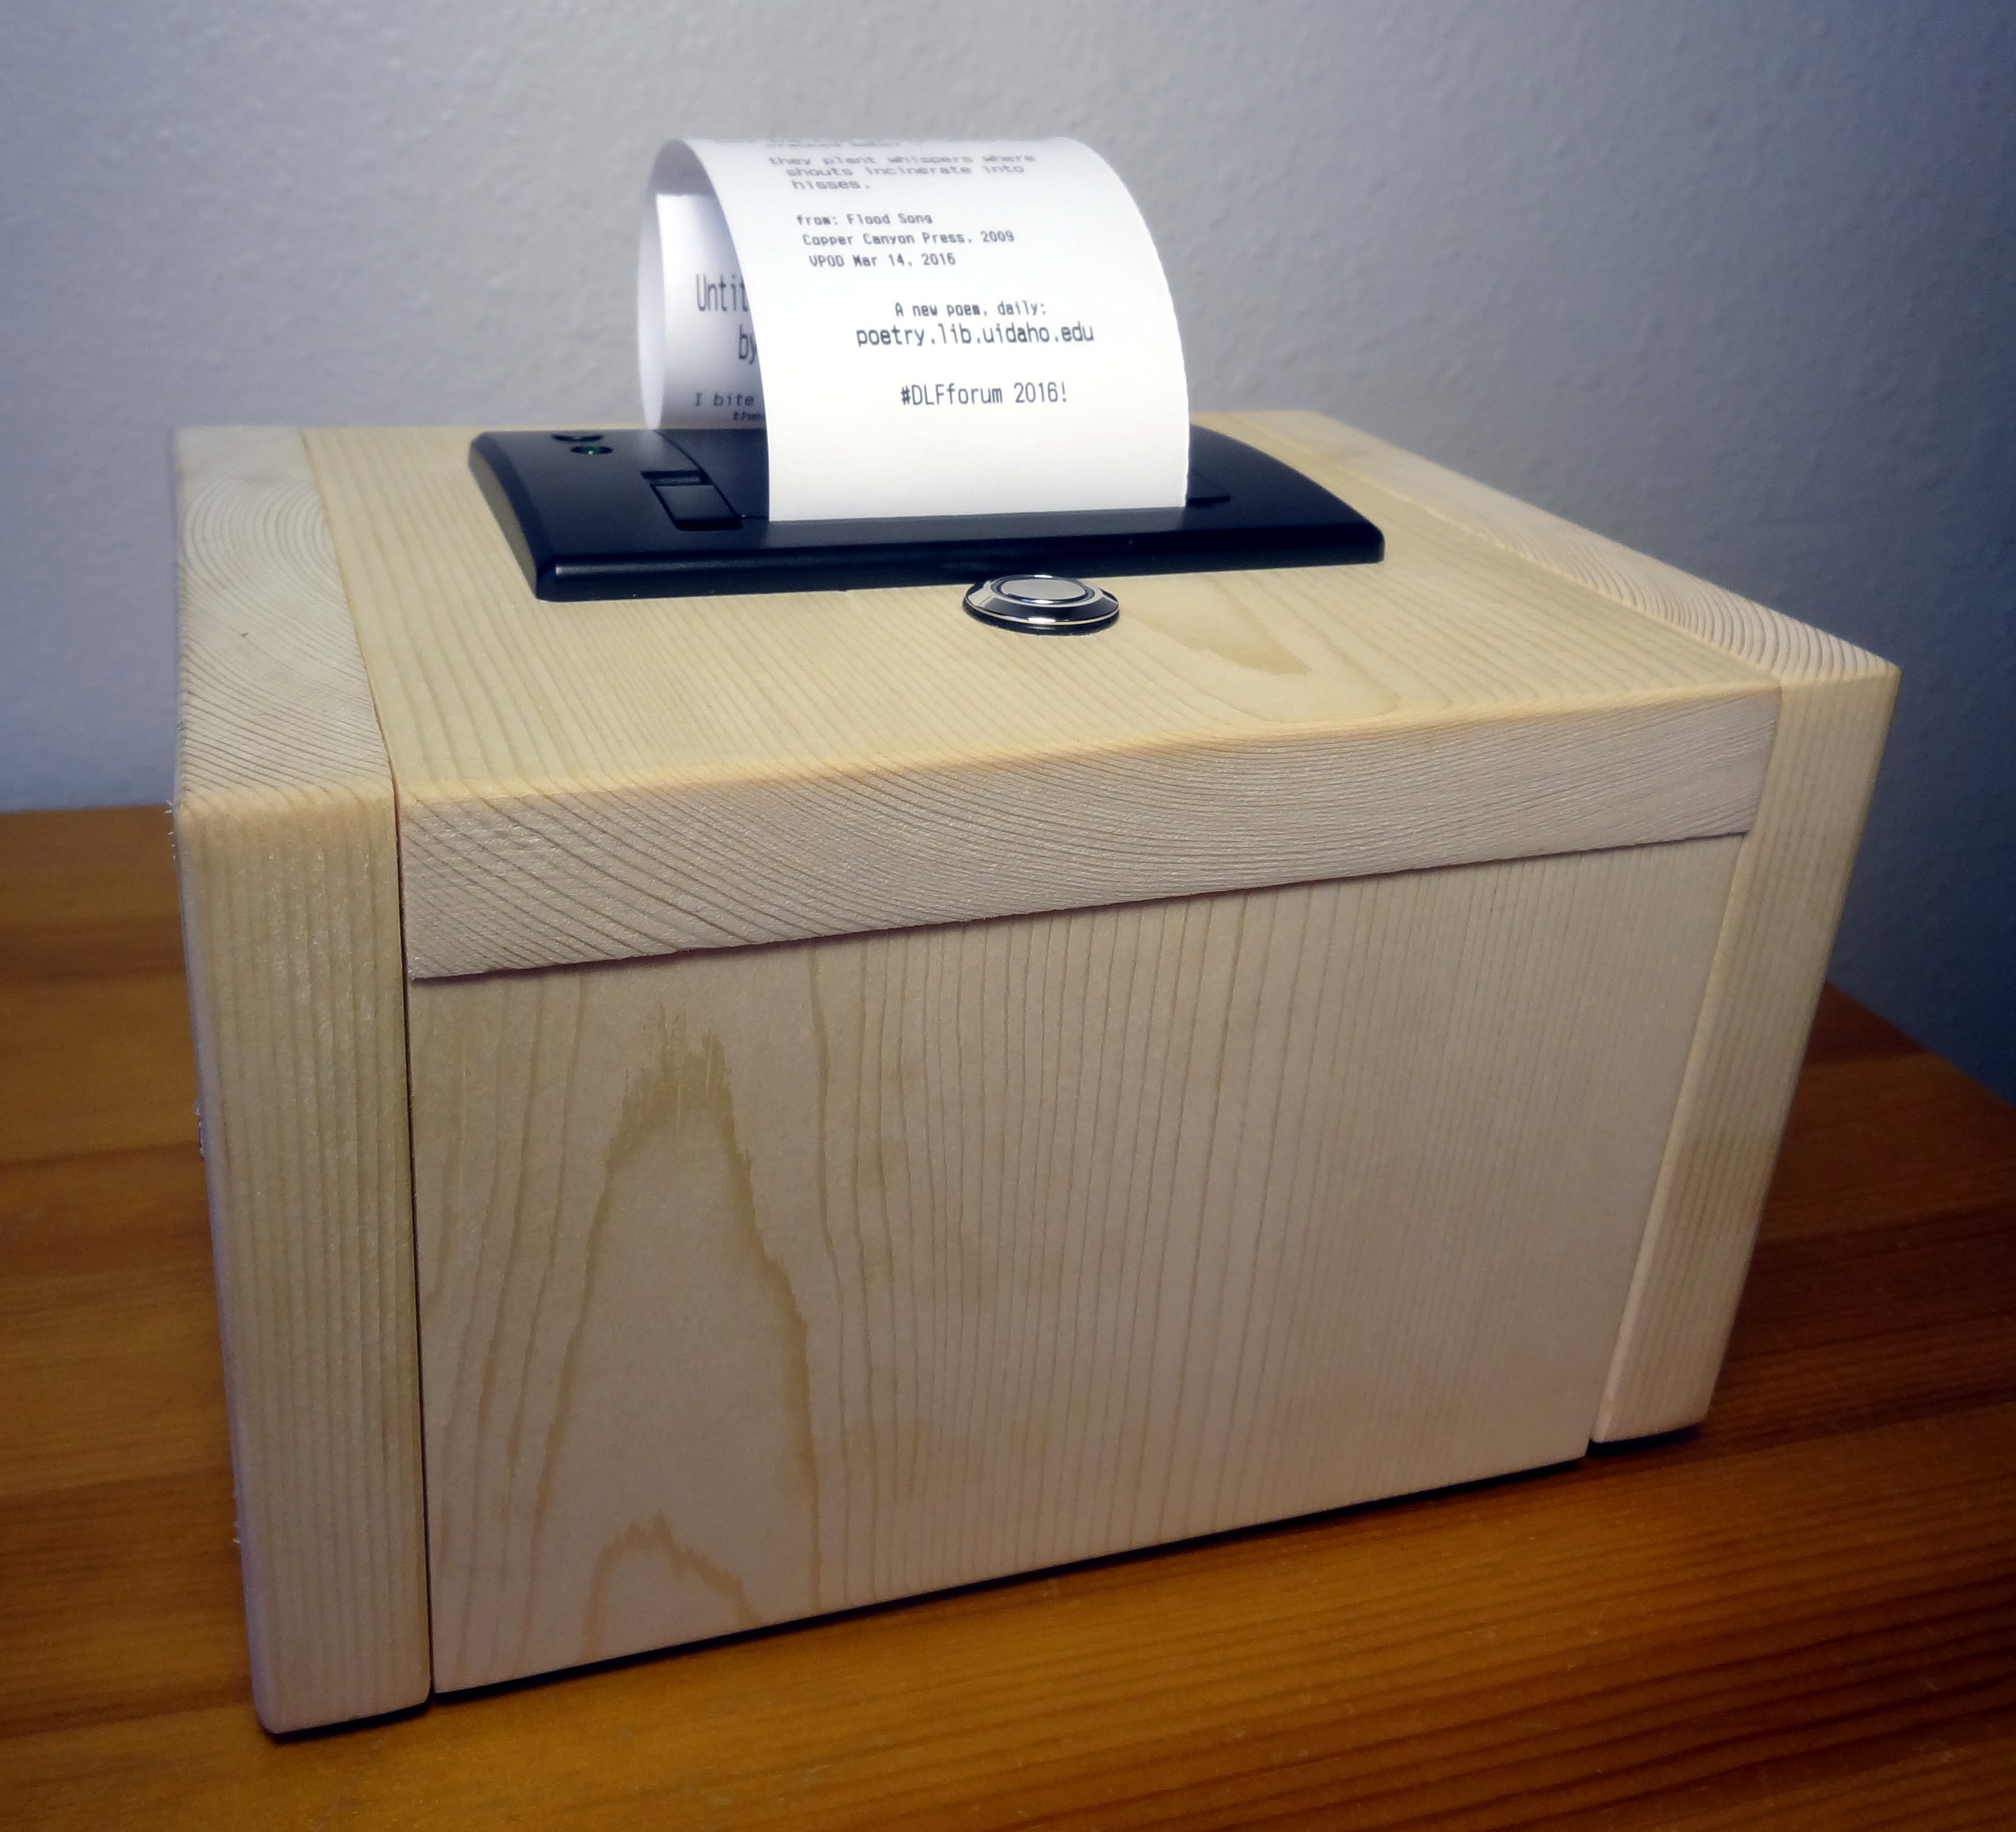 poemBot wooden case